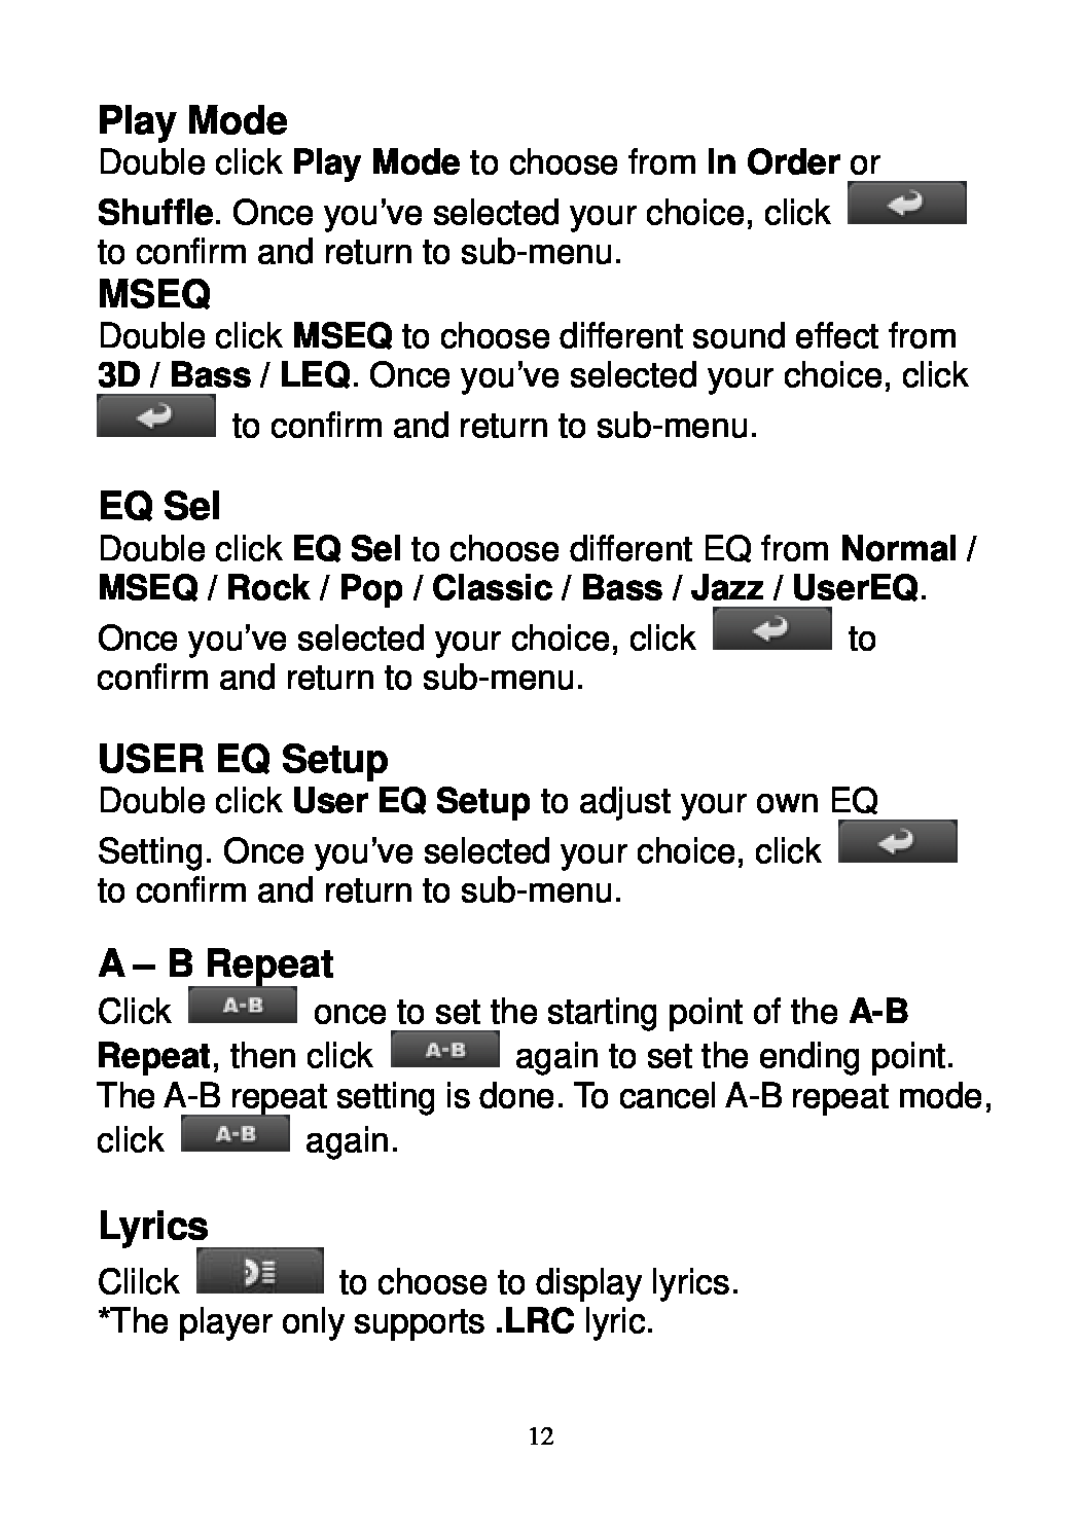 Sylvania SMPK3604 user manual Play Mode, Mseq, EQ Sel, USER EQ Setup, A - B Repeat, Lyrics 